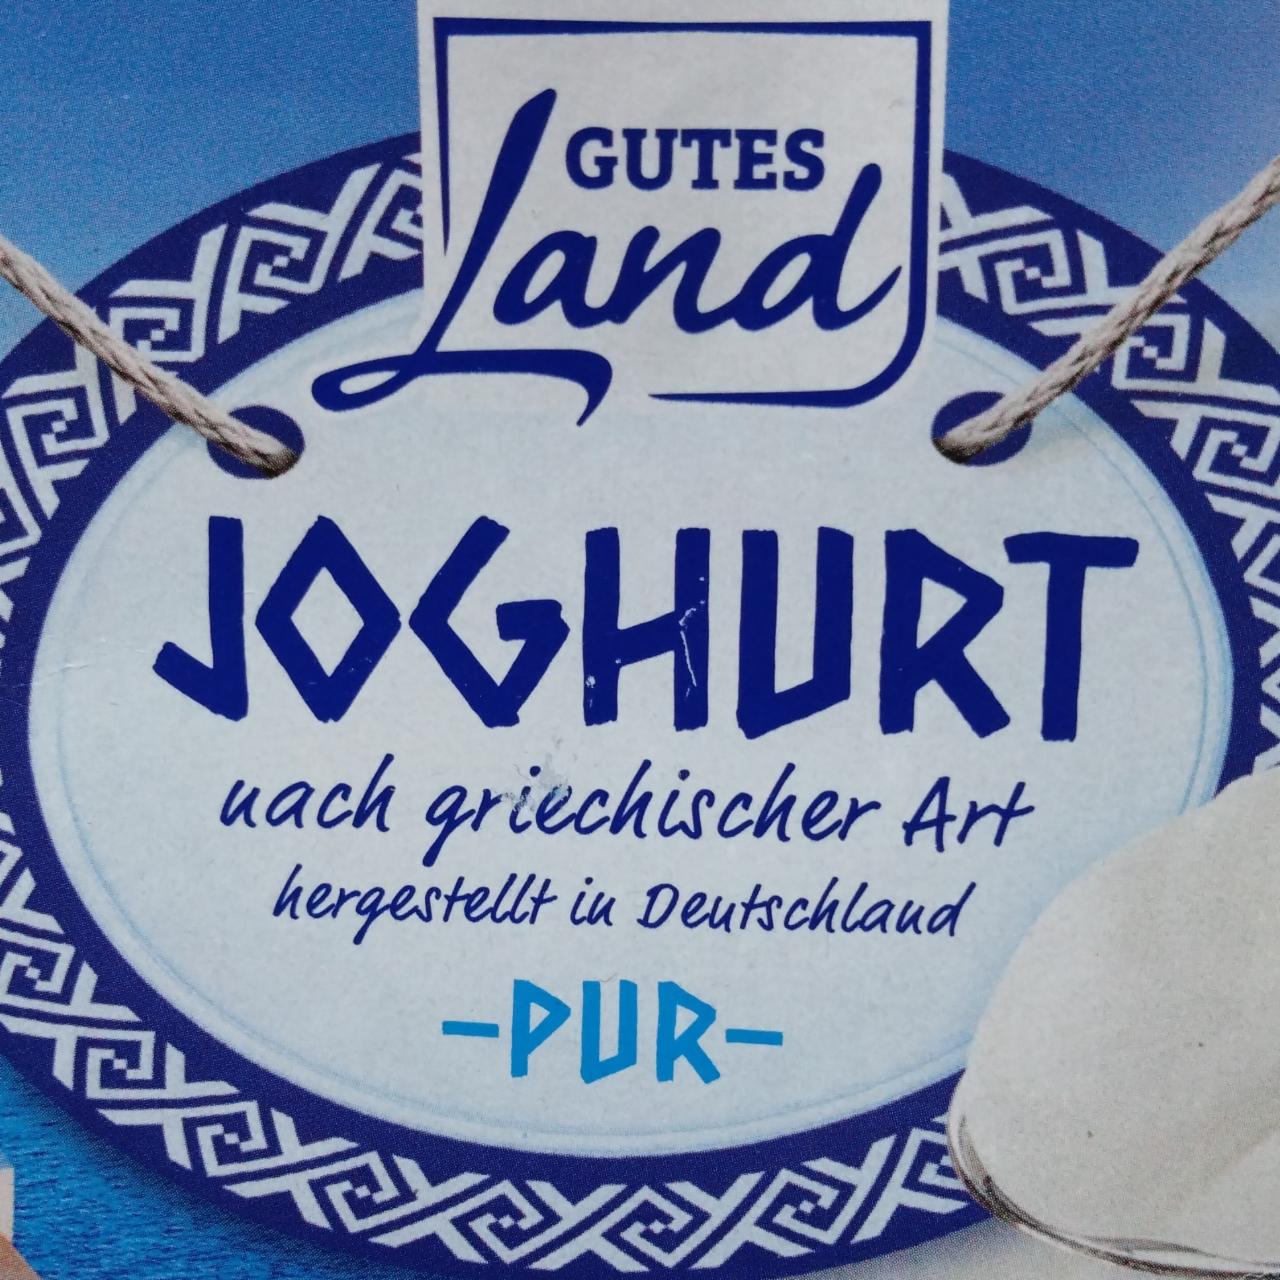 Фото - йогурт Joghurt nach griechischer Art pur Gutes Land